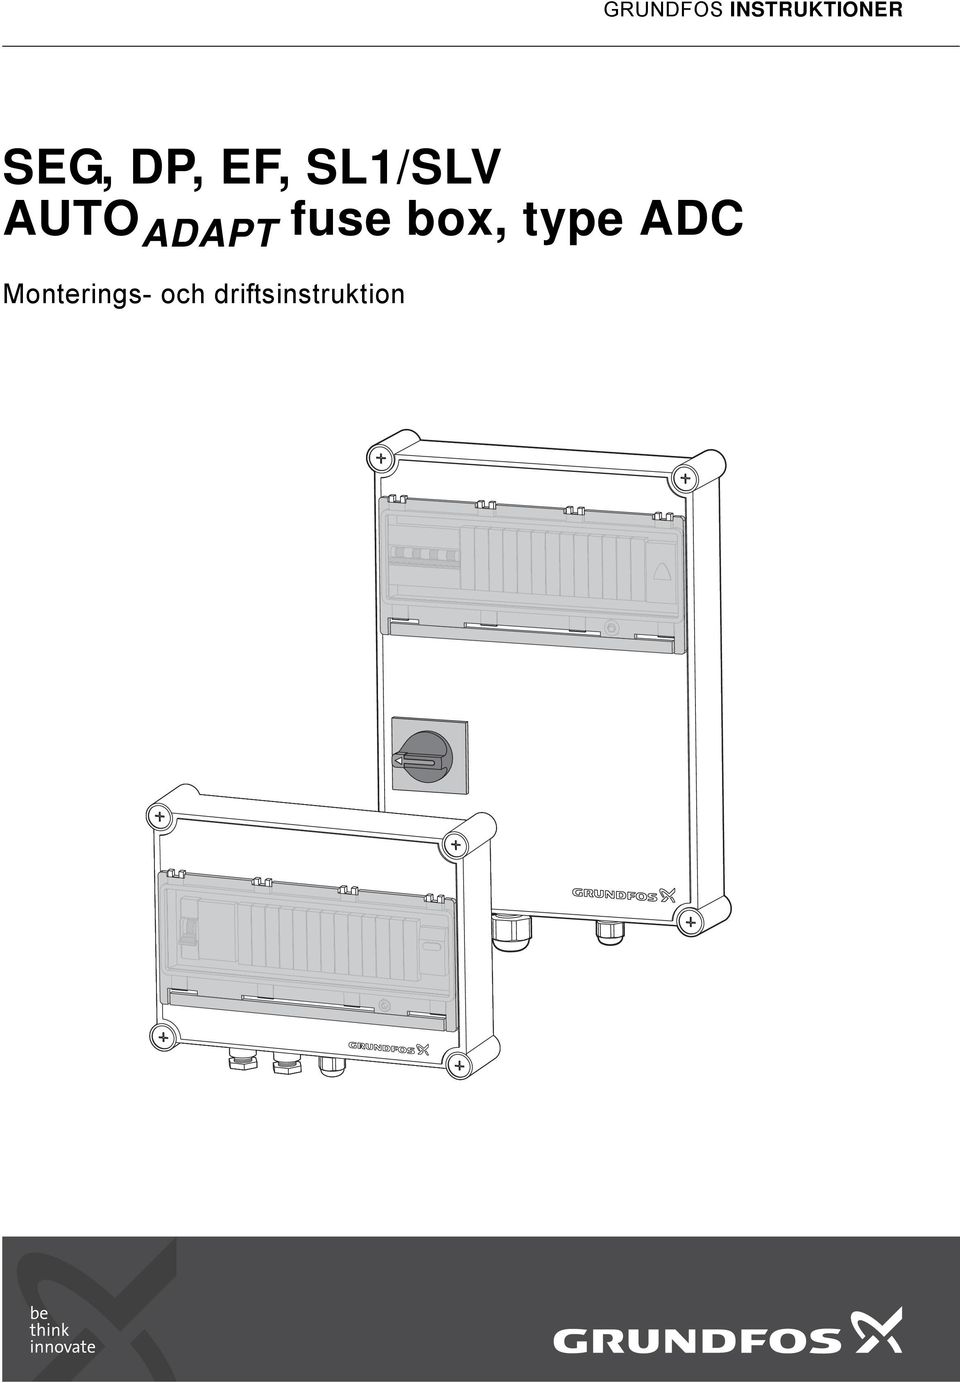 ADAPT fuse box, type ADC